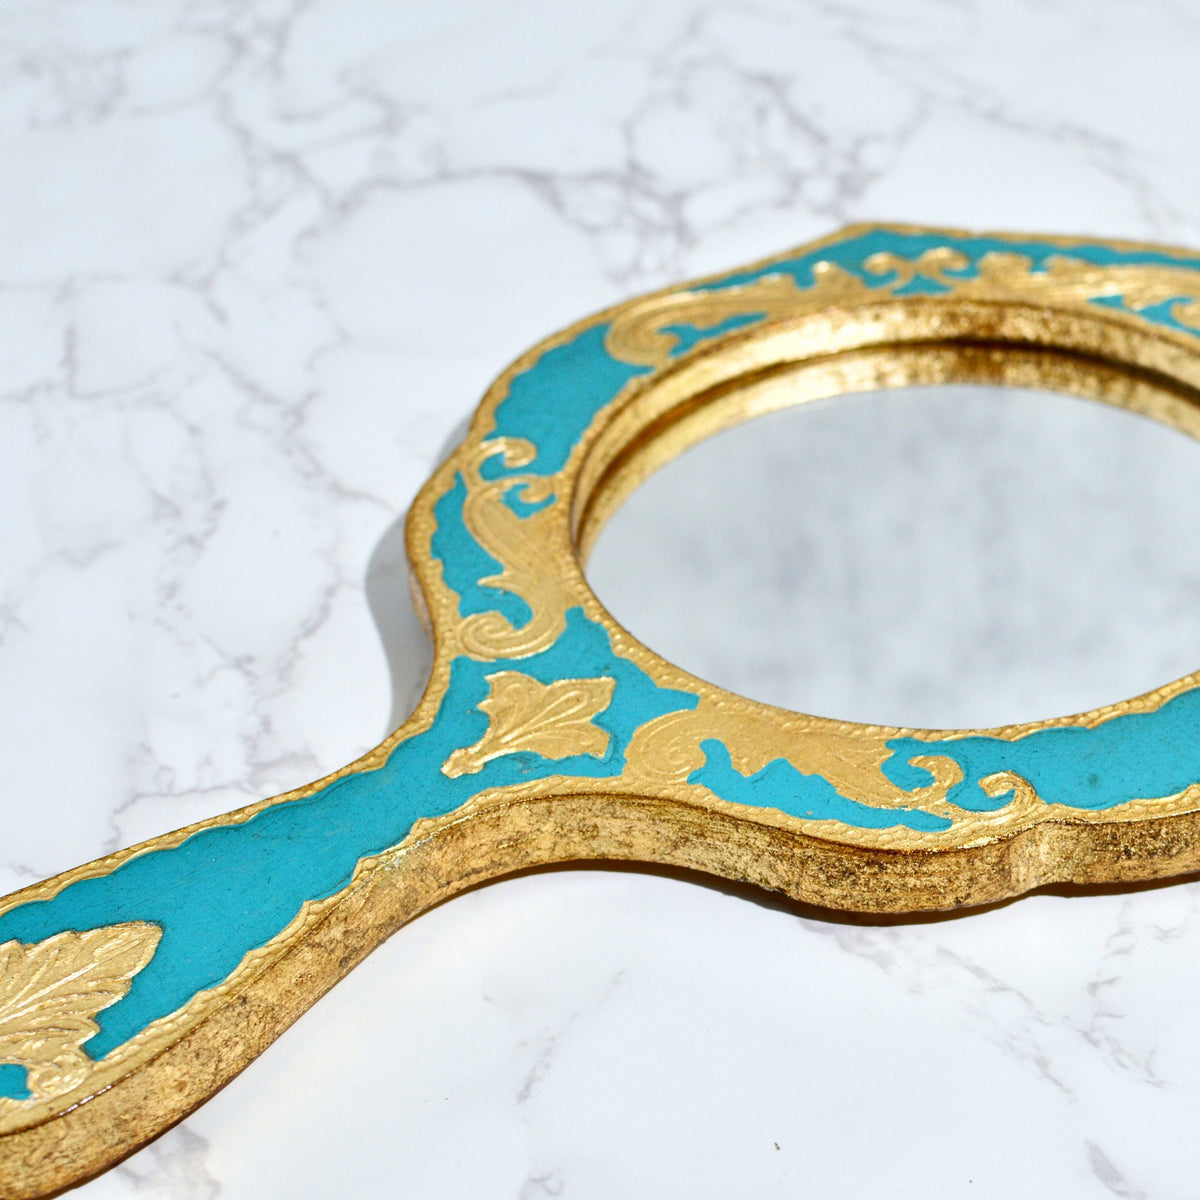 Florentine Wood Round Hand Mirror, Made in Italy - My Italian Decor